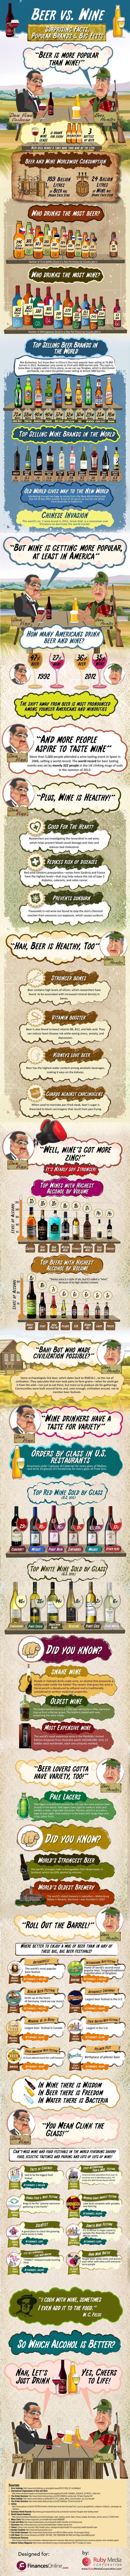 Beer vs. Wine: Surprising Facts, Popular Brands & Big Festivals